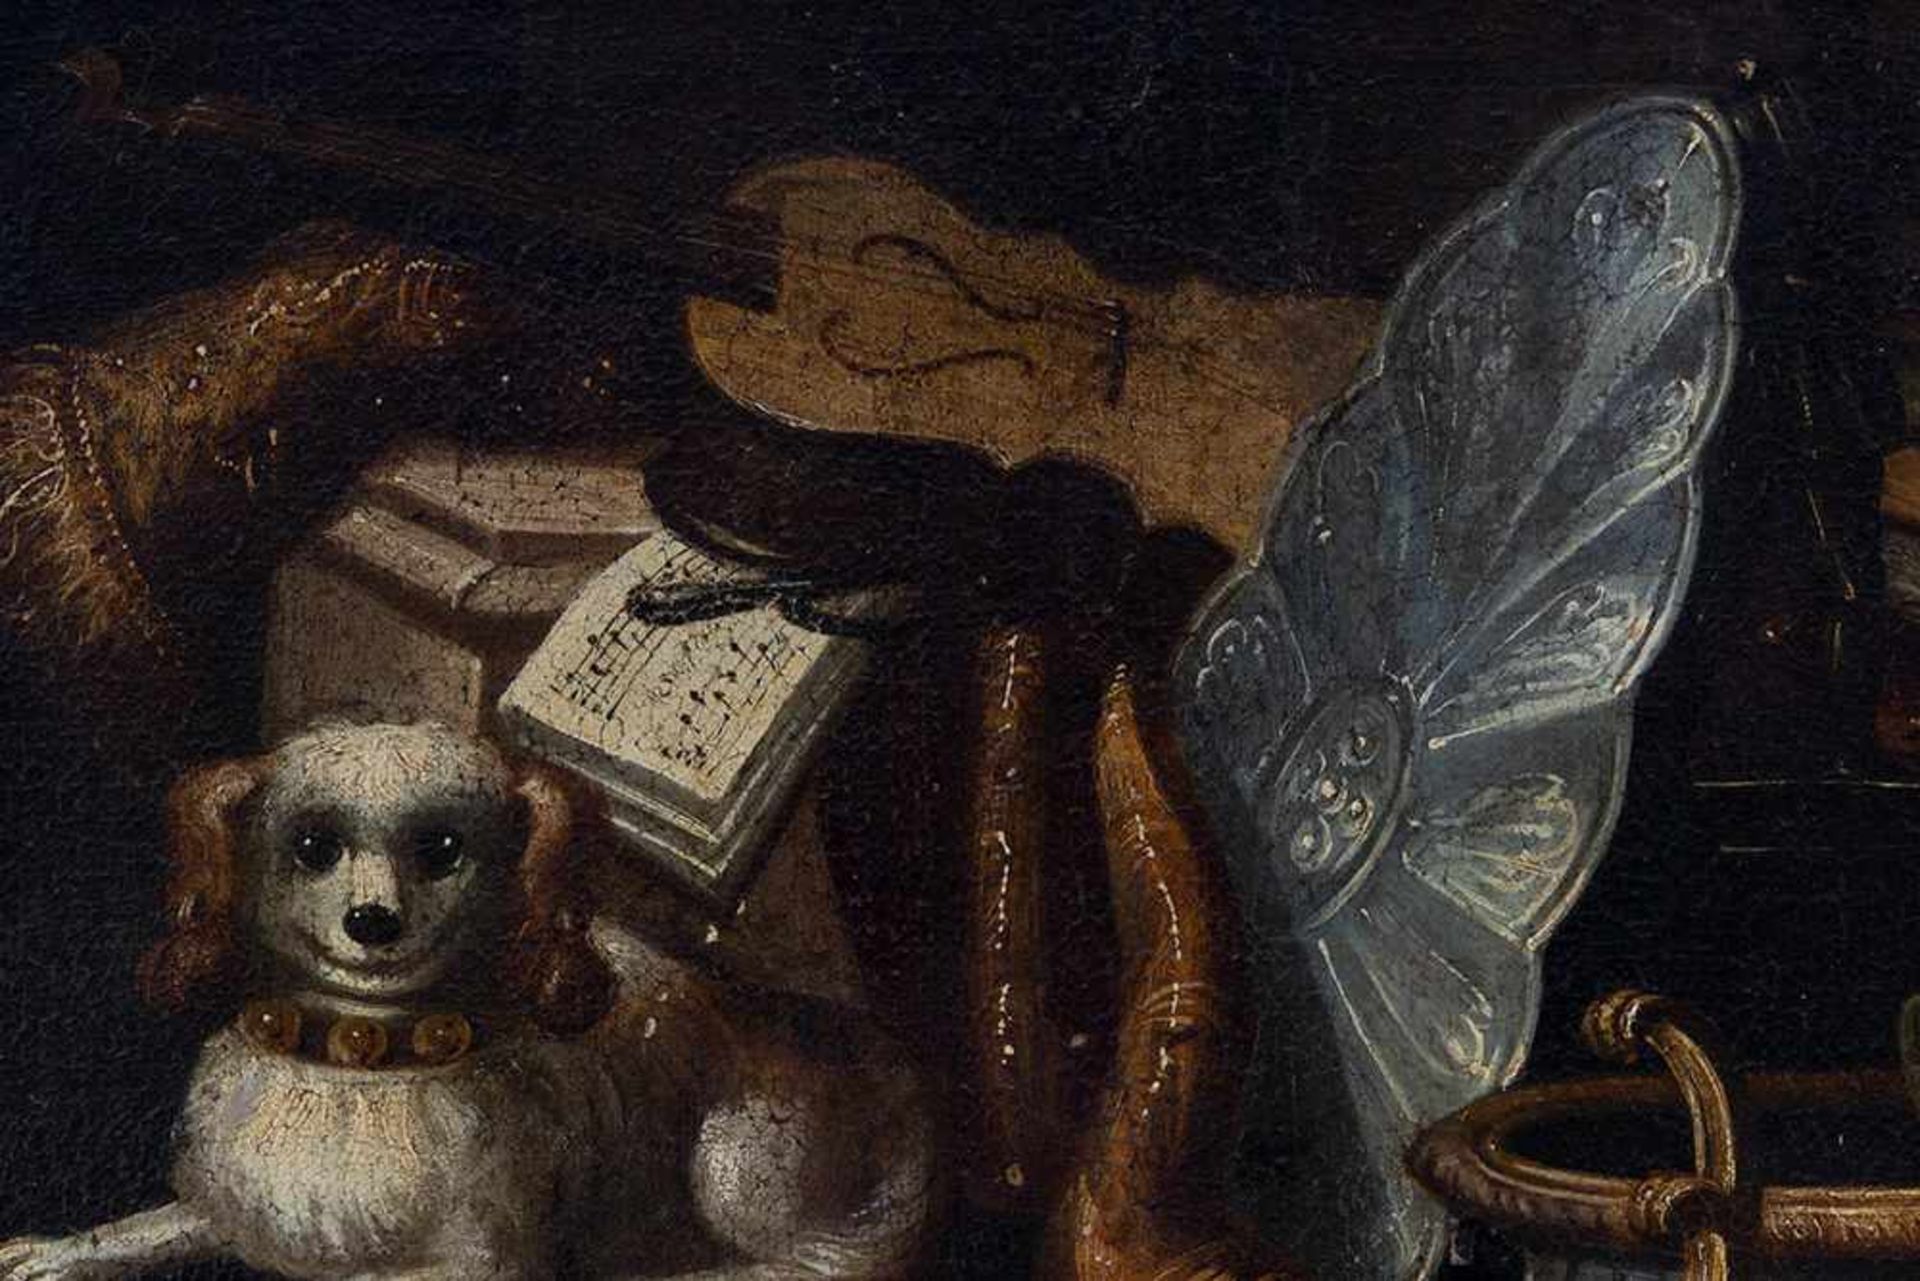 Escuela napolitana de finales del siglo XVII. Seguidor de Francesco Noletti. "Bodegón con perrito" - Image 4 of 4